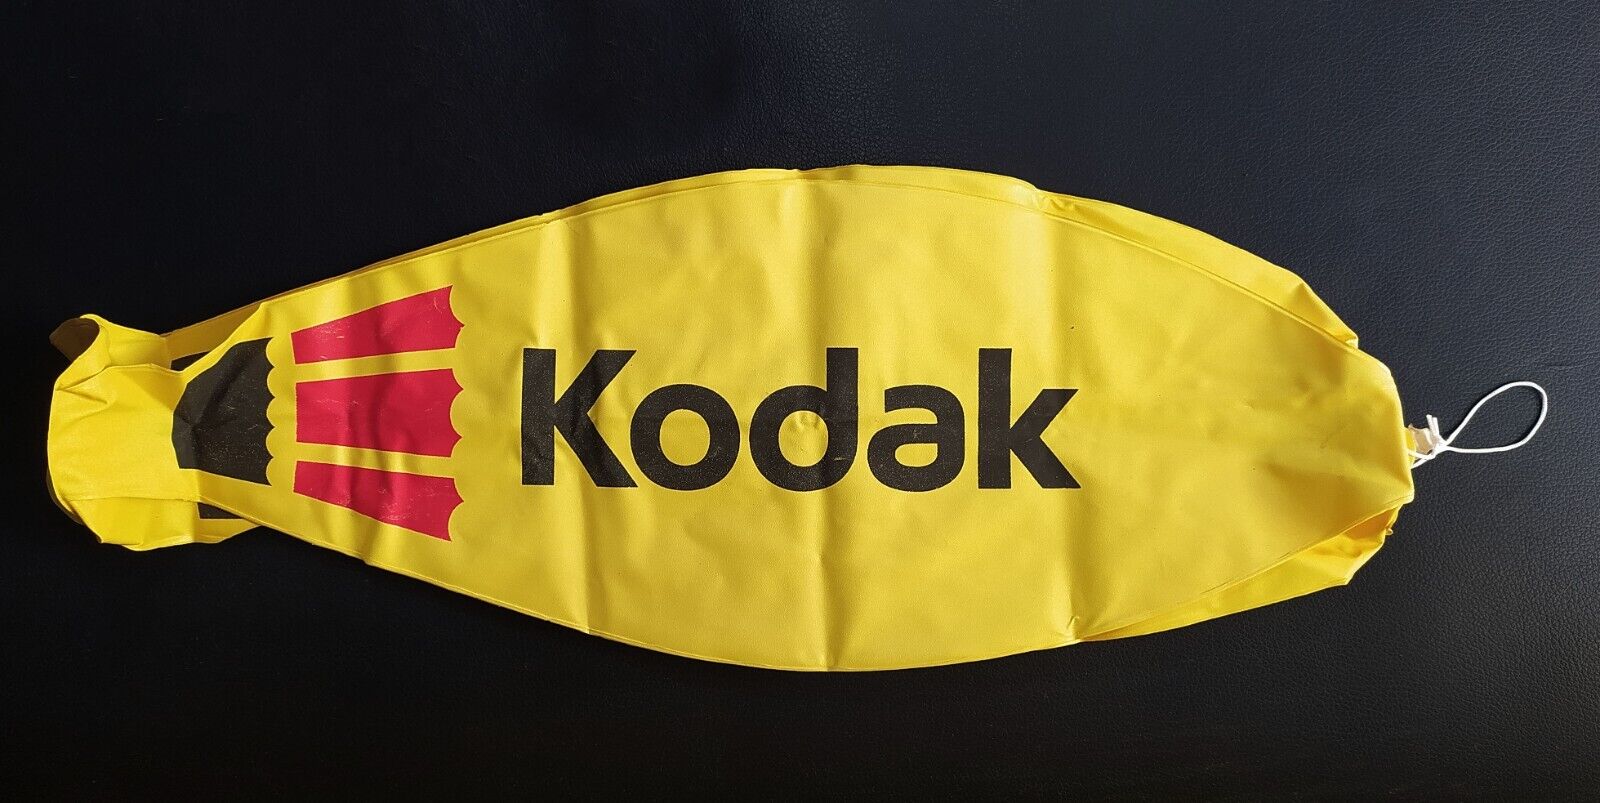 Kodak Yellow Promotional Inflatable Balloon Blimp for Store Display 